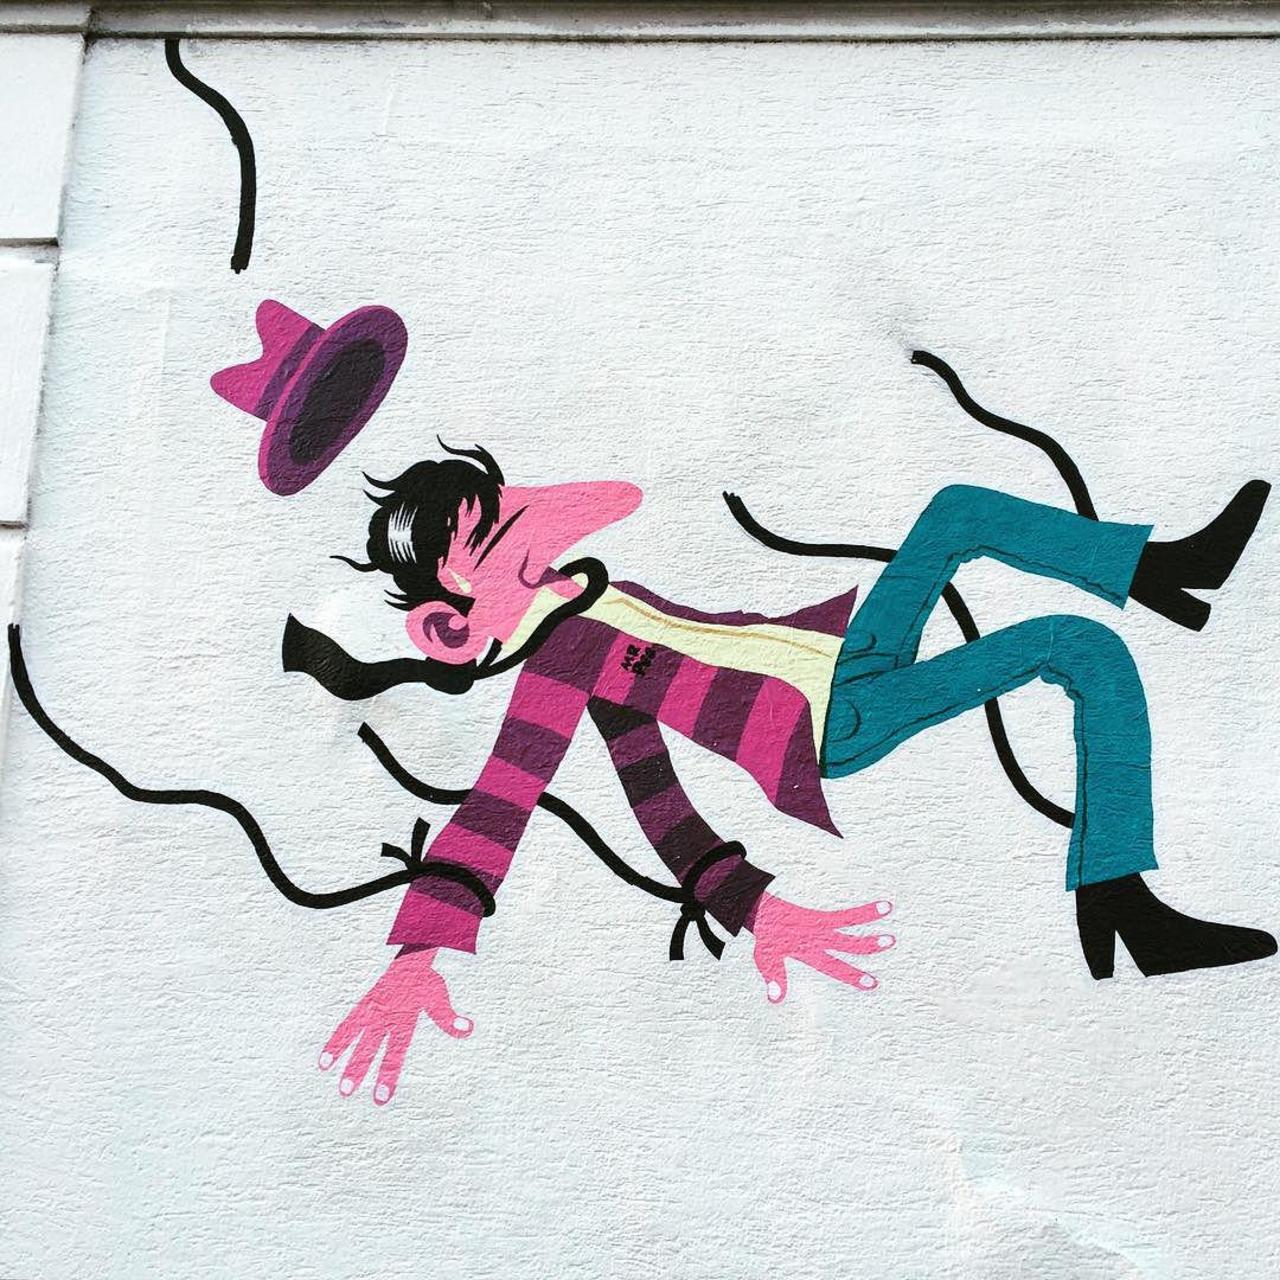 #Paris #graffiti photo by @elricoelmagnifico http://ift.tt/1PJNfBW #StreetArt http://t.co/g0JLYKOiBx